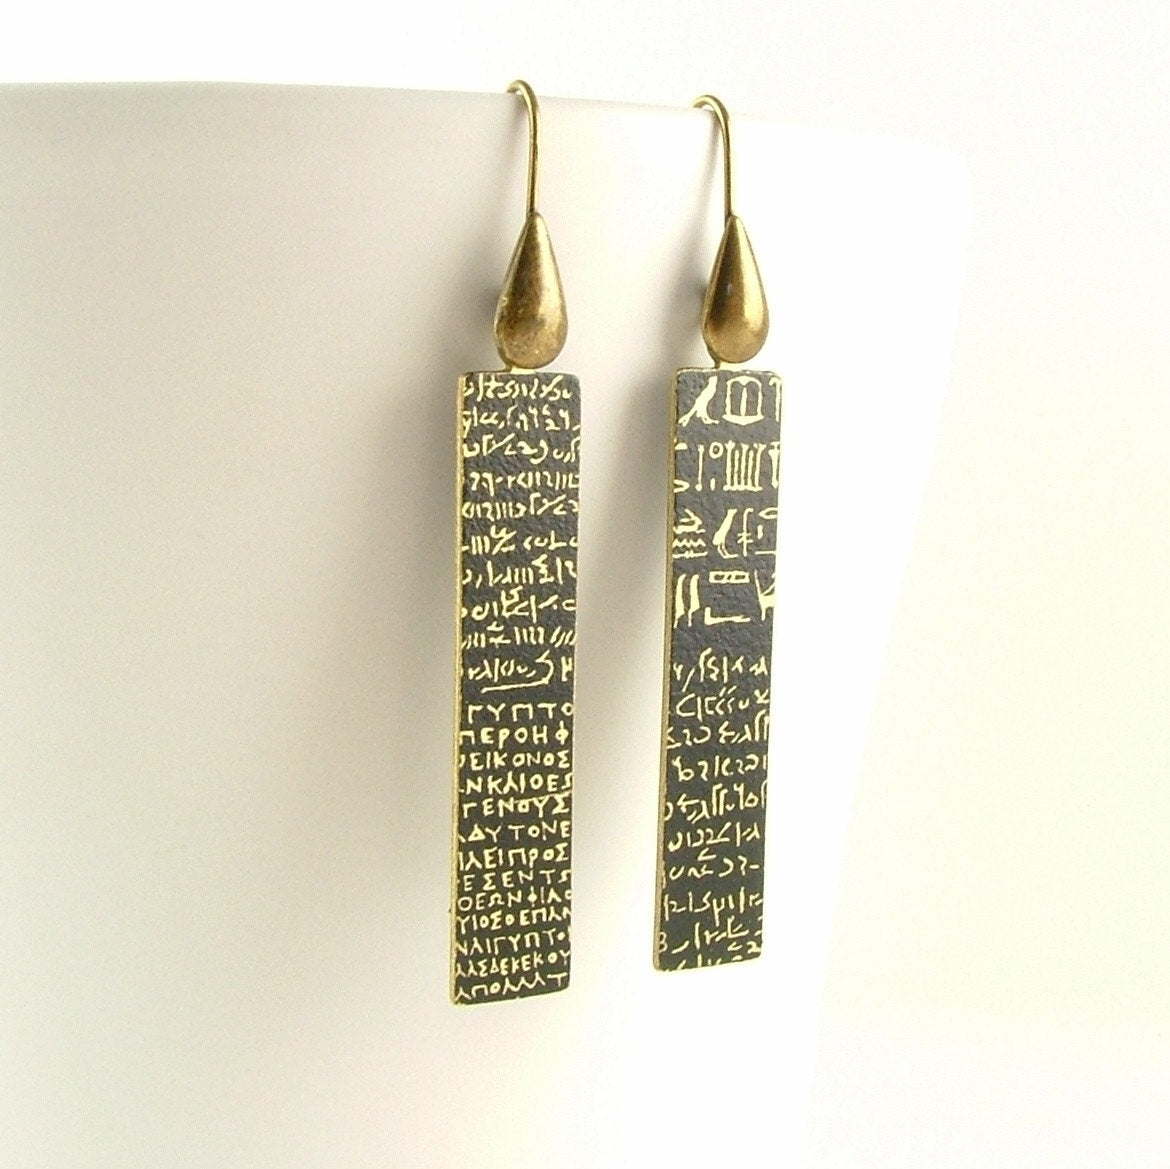 Rosetta Stone Earrings